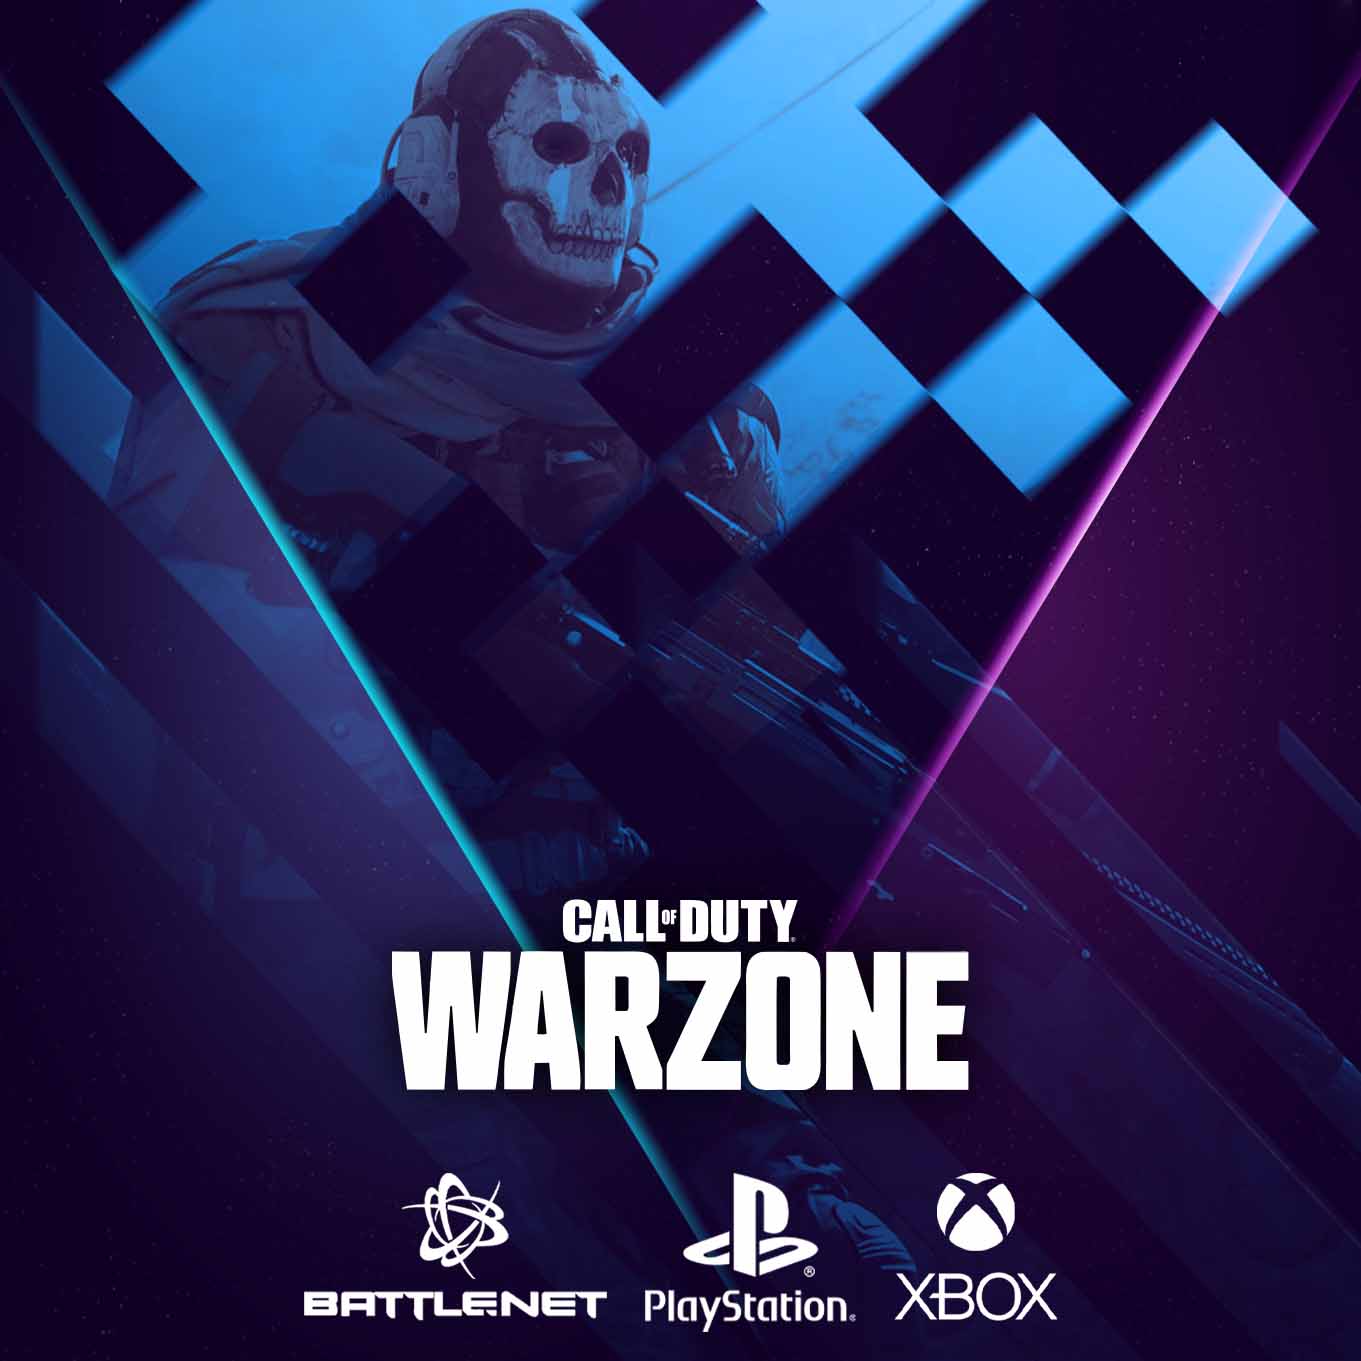 Buy Call of Duty: WARZONE 2 - Fresh/Smurf Battle.net Account